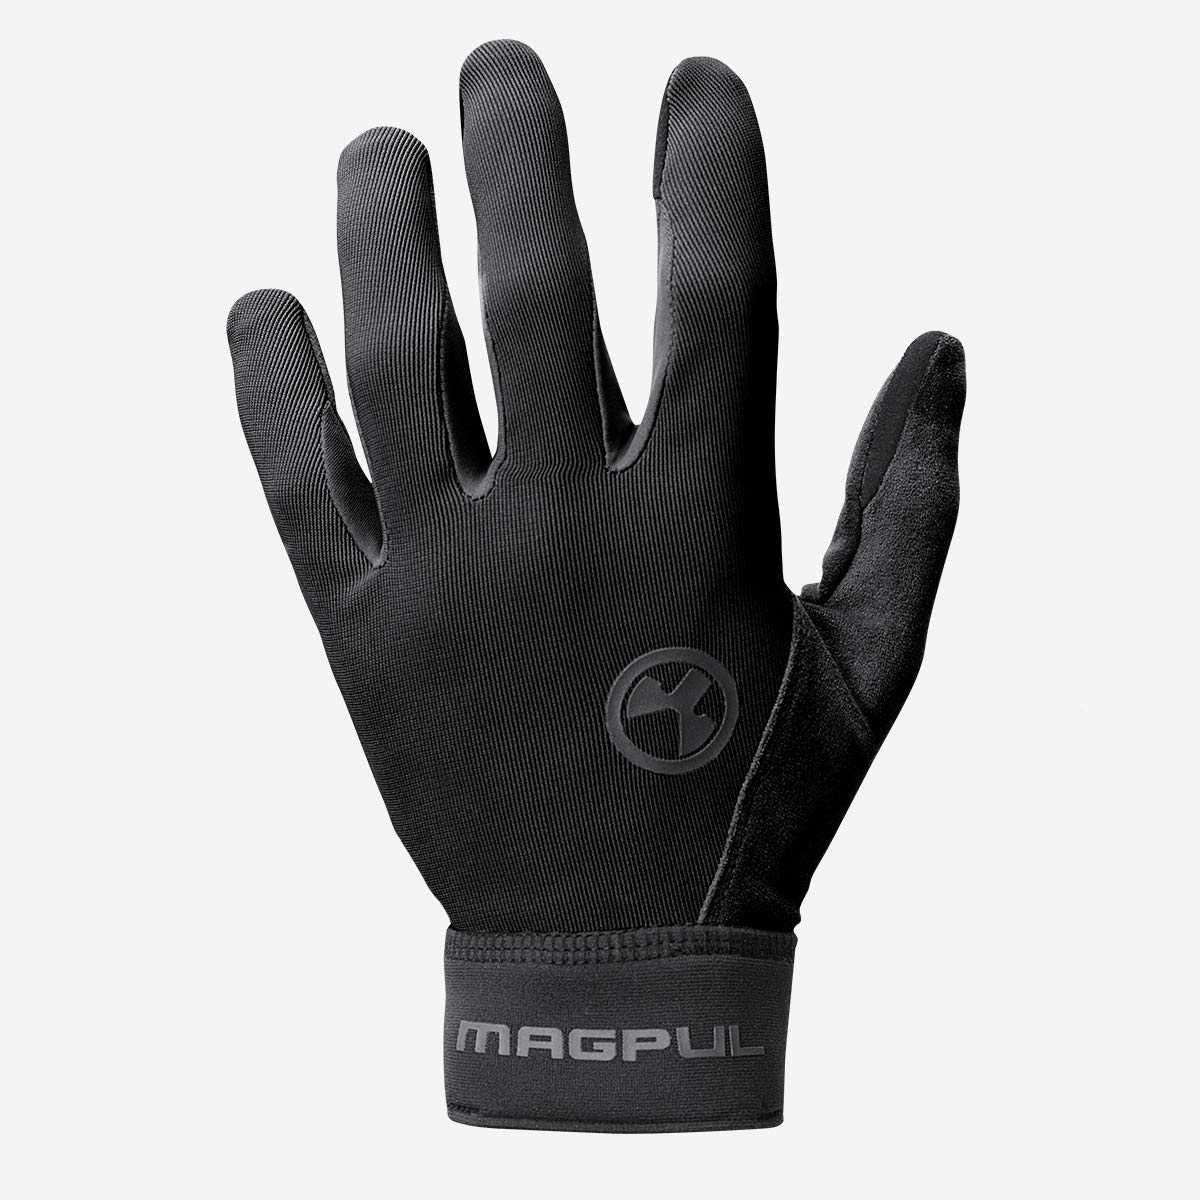 Magpul Technical Glove 2.0 Lightweight Work Gloves, Black, XX-Large